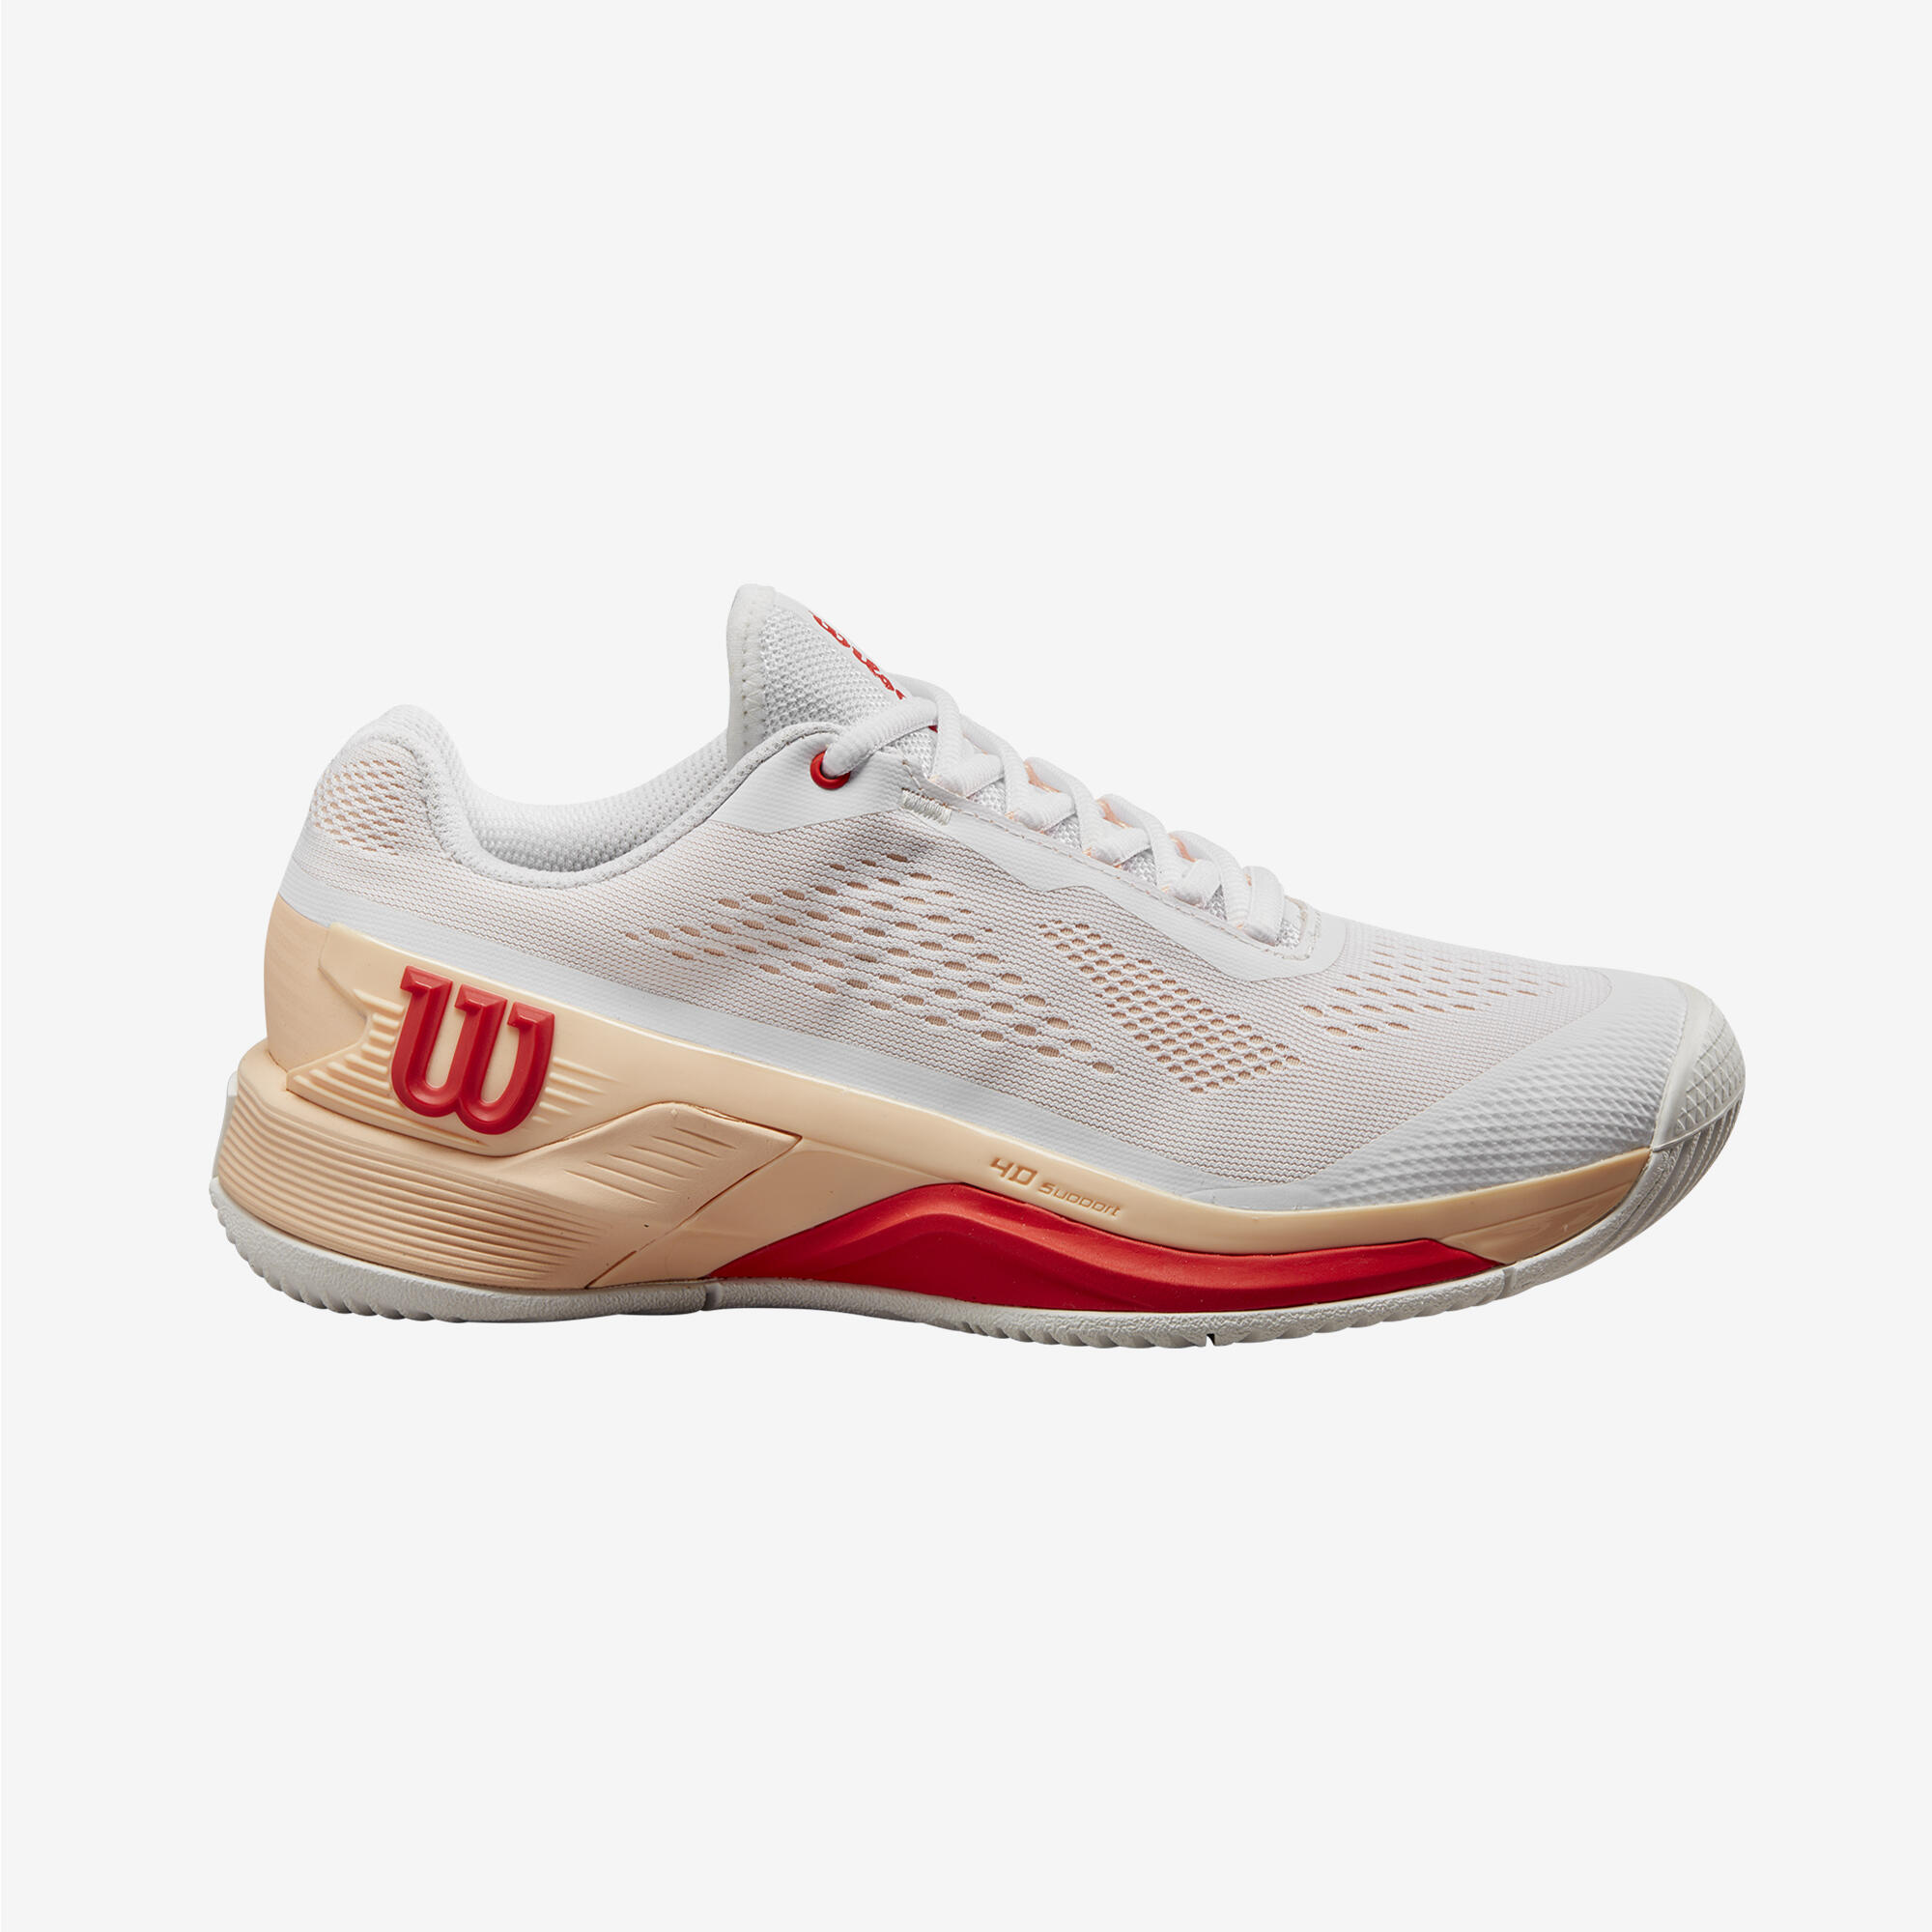 Women's Tennis Multicourt Shoes Rush Pro 4.0 - White/Scallop Shell 1/5